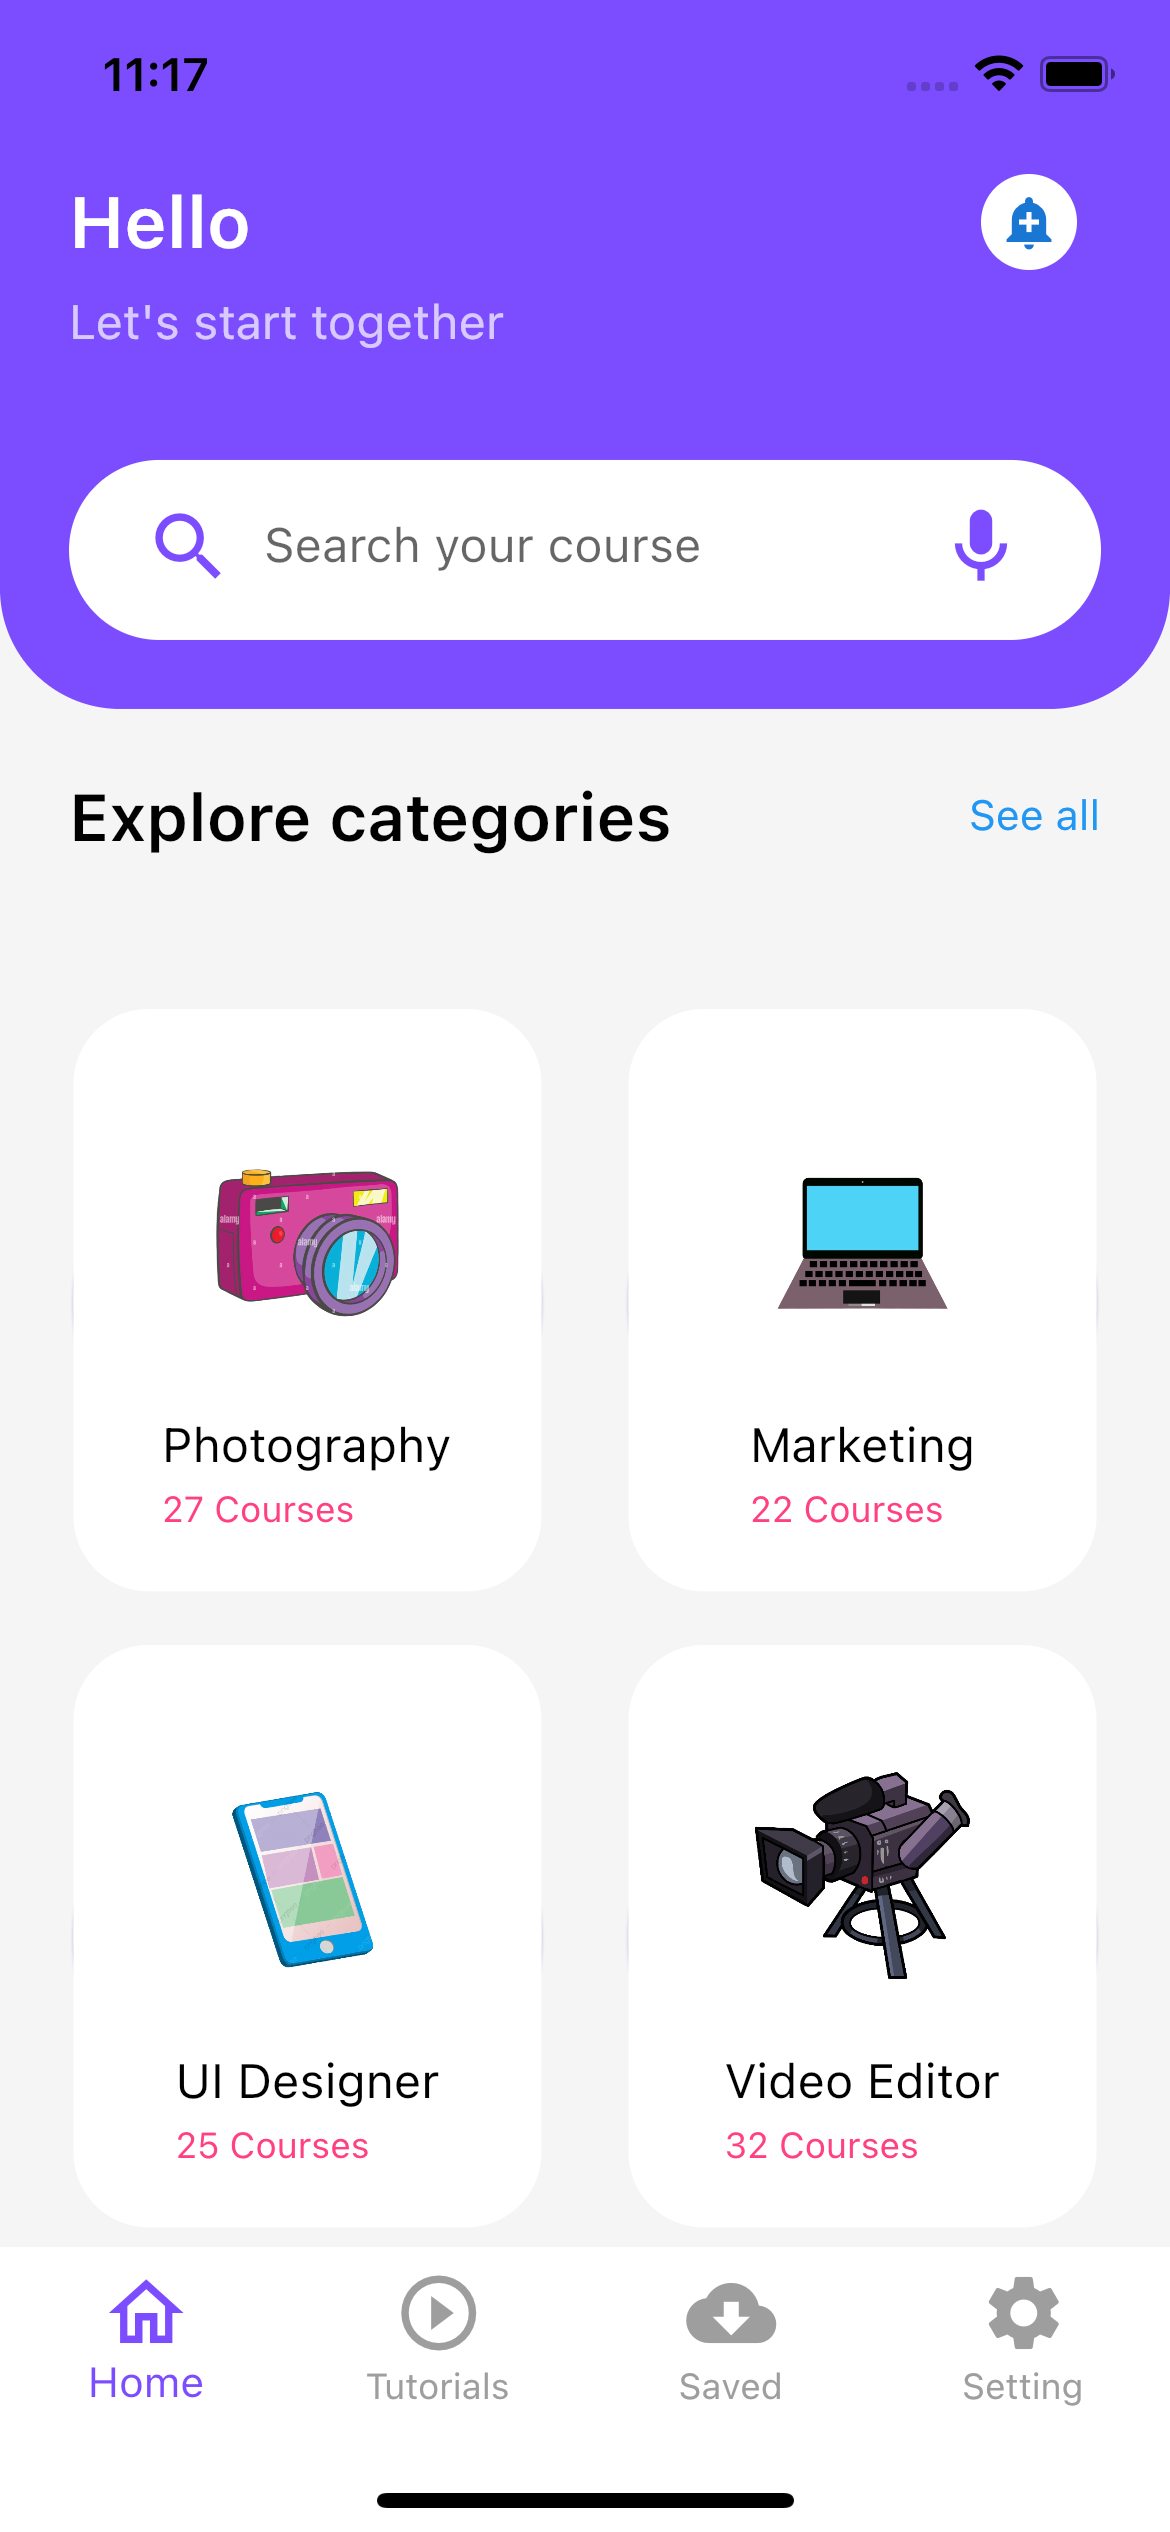 Flutter UI took kit to build an education/skill app for offering online tutorials